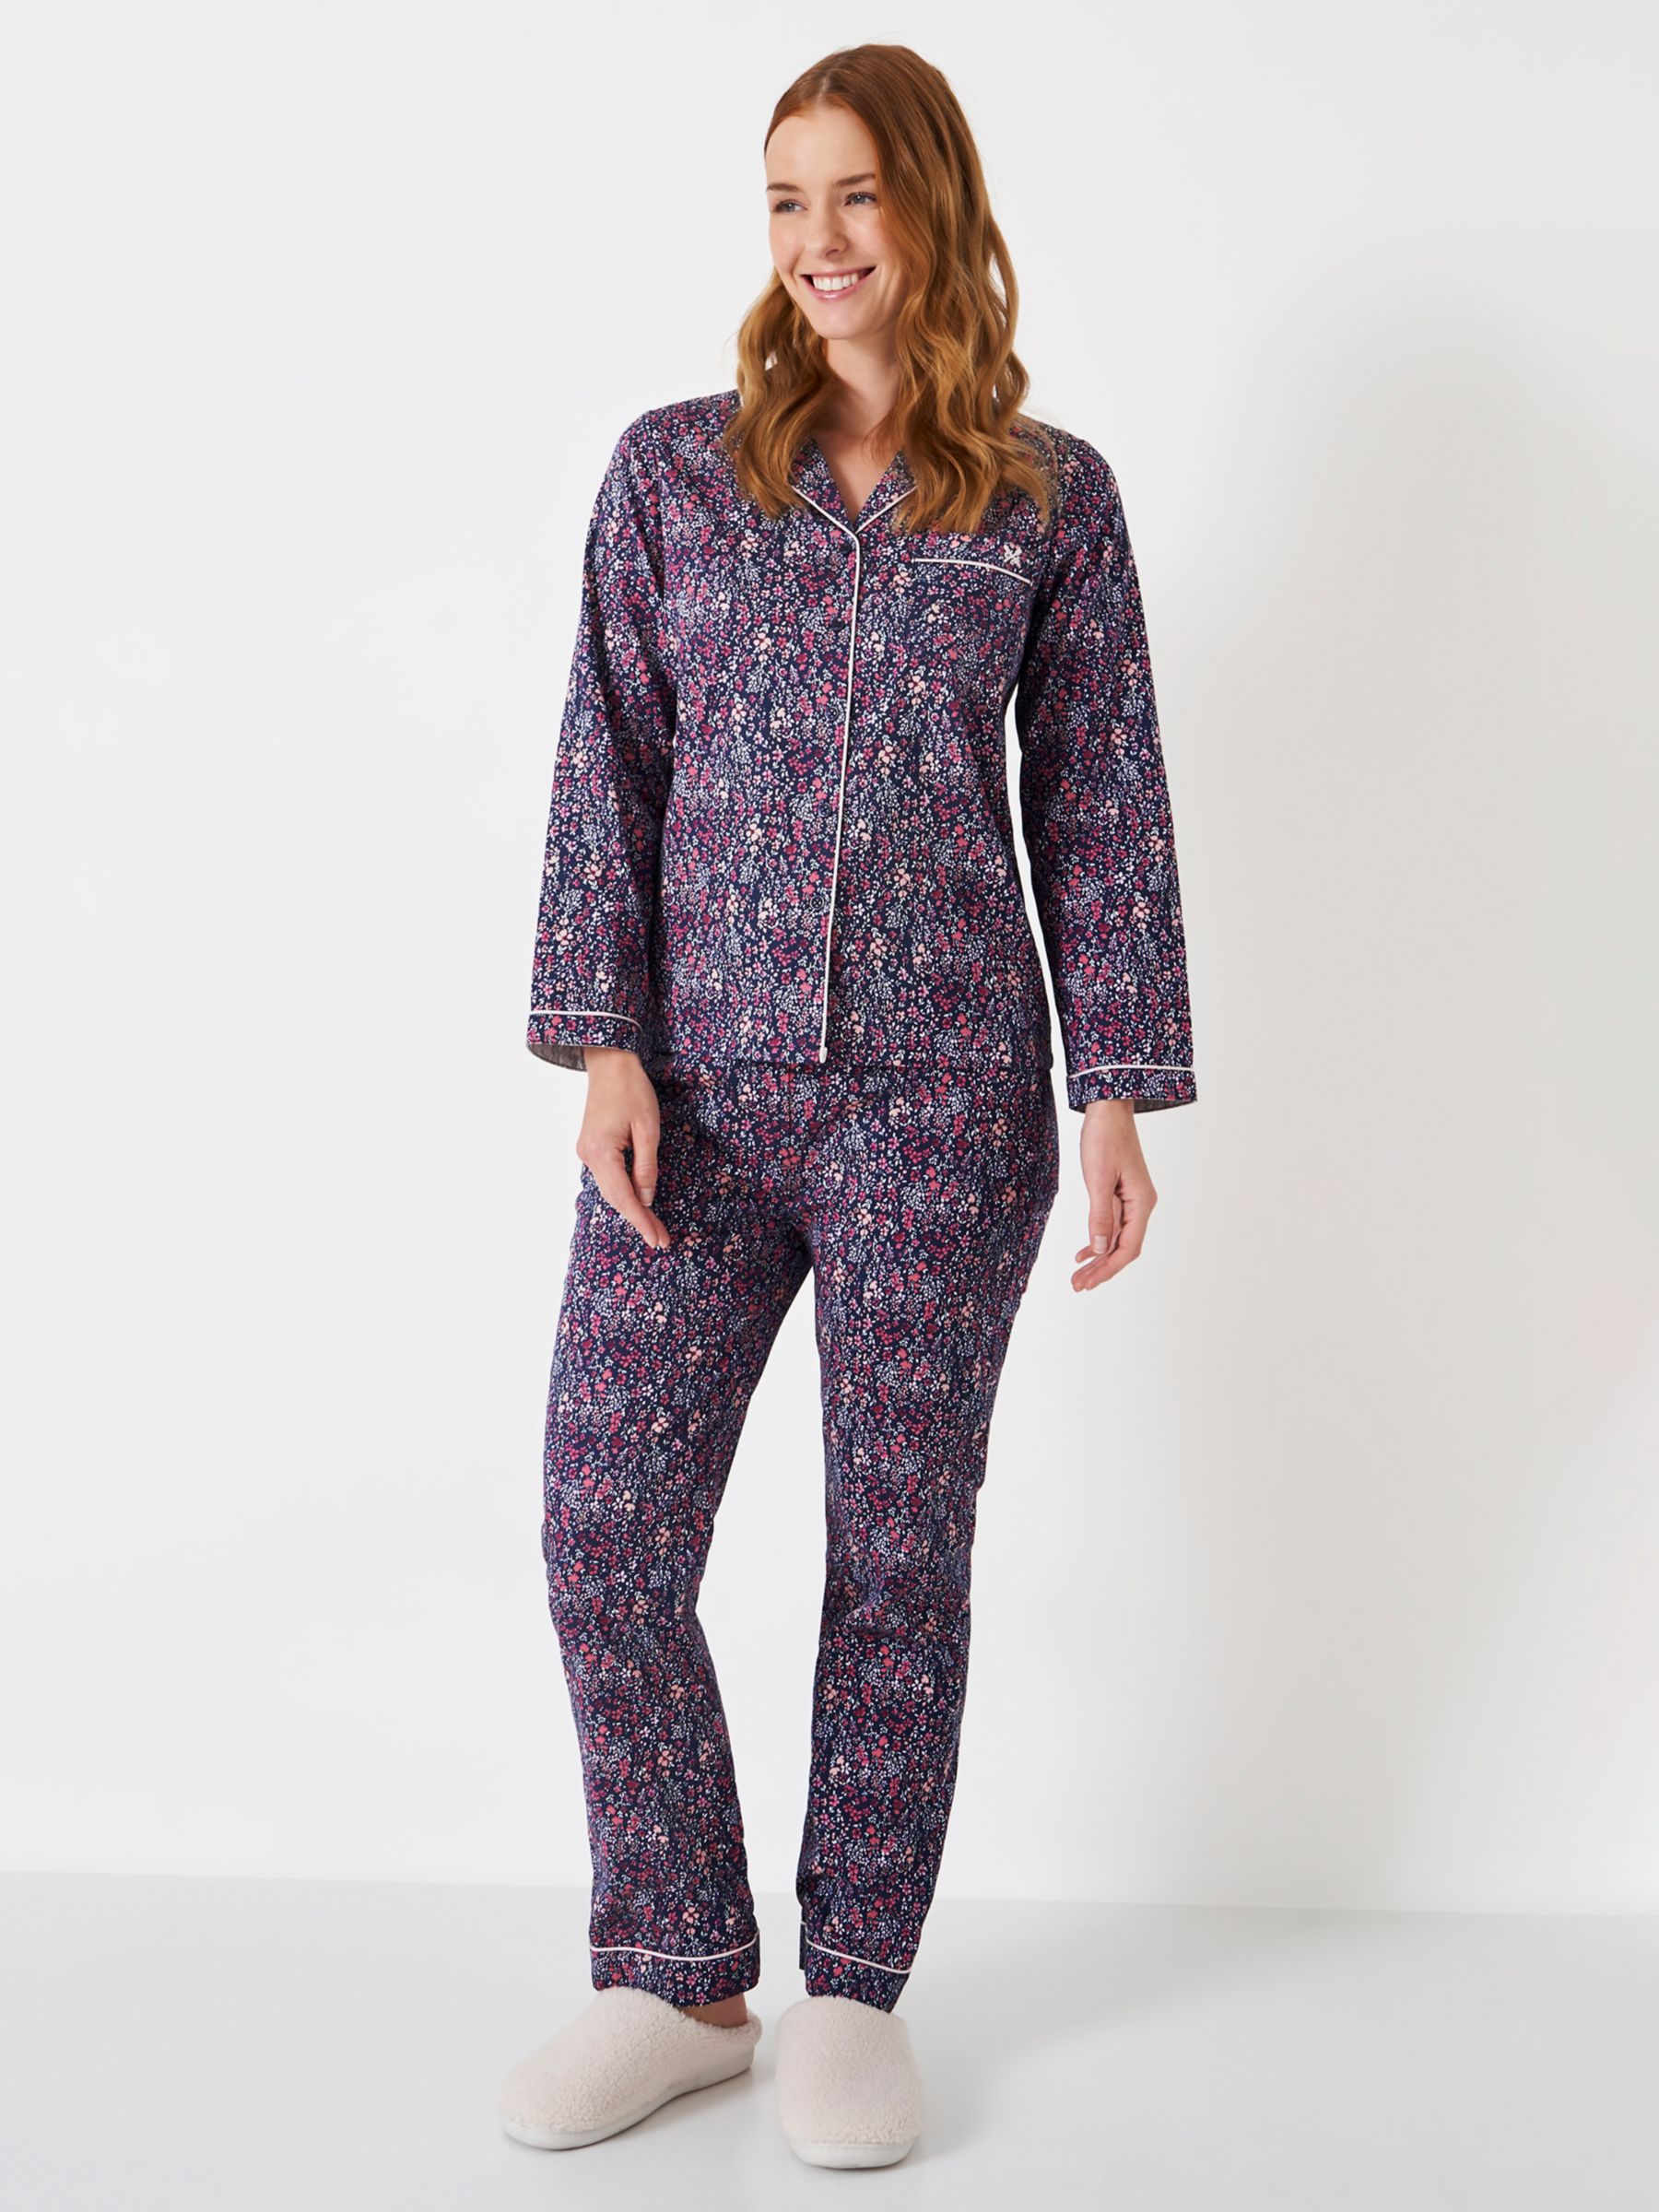 Crew Clothing Flannel Print Pyjamas, Navy Floral at John Lewis & Partners